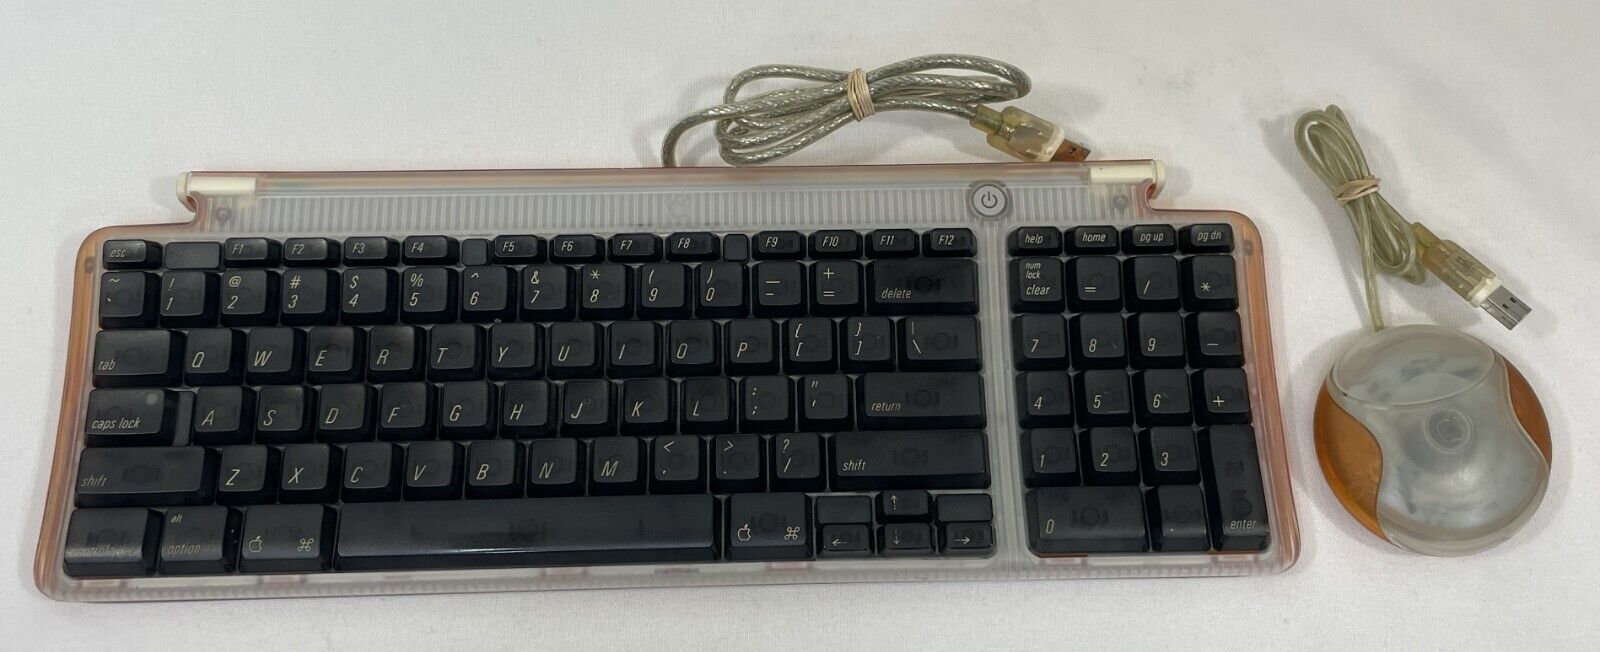 VINTAGE Apple USB Keyboard Pro M2452 Clear Tangerine Orange  W/ USB MOUSE M4848